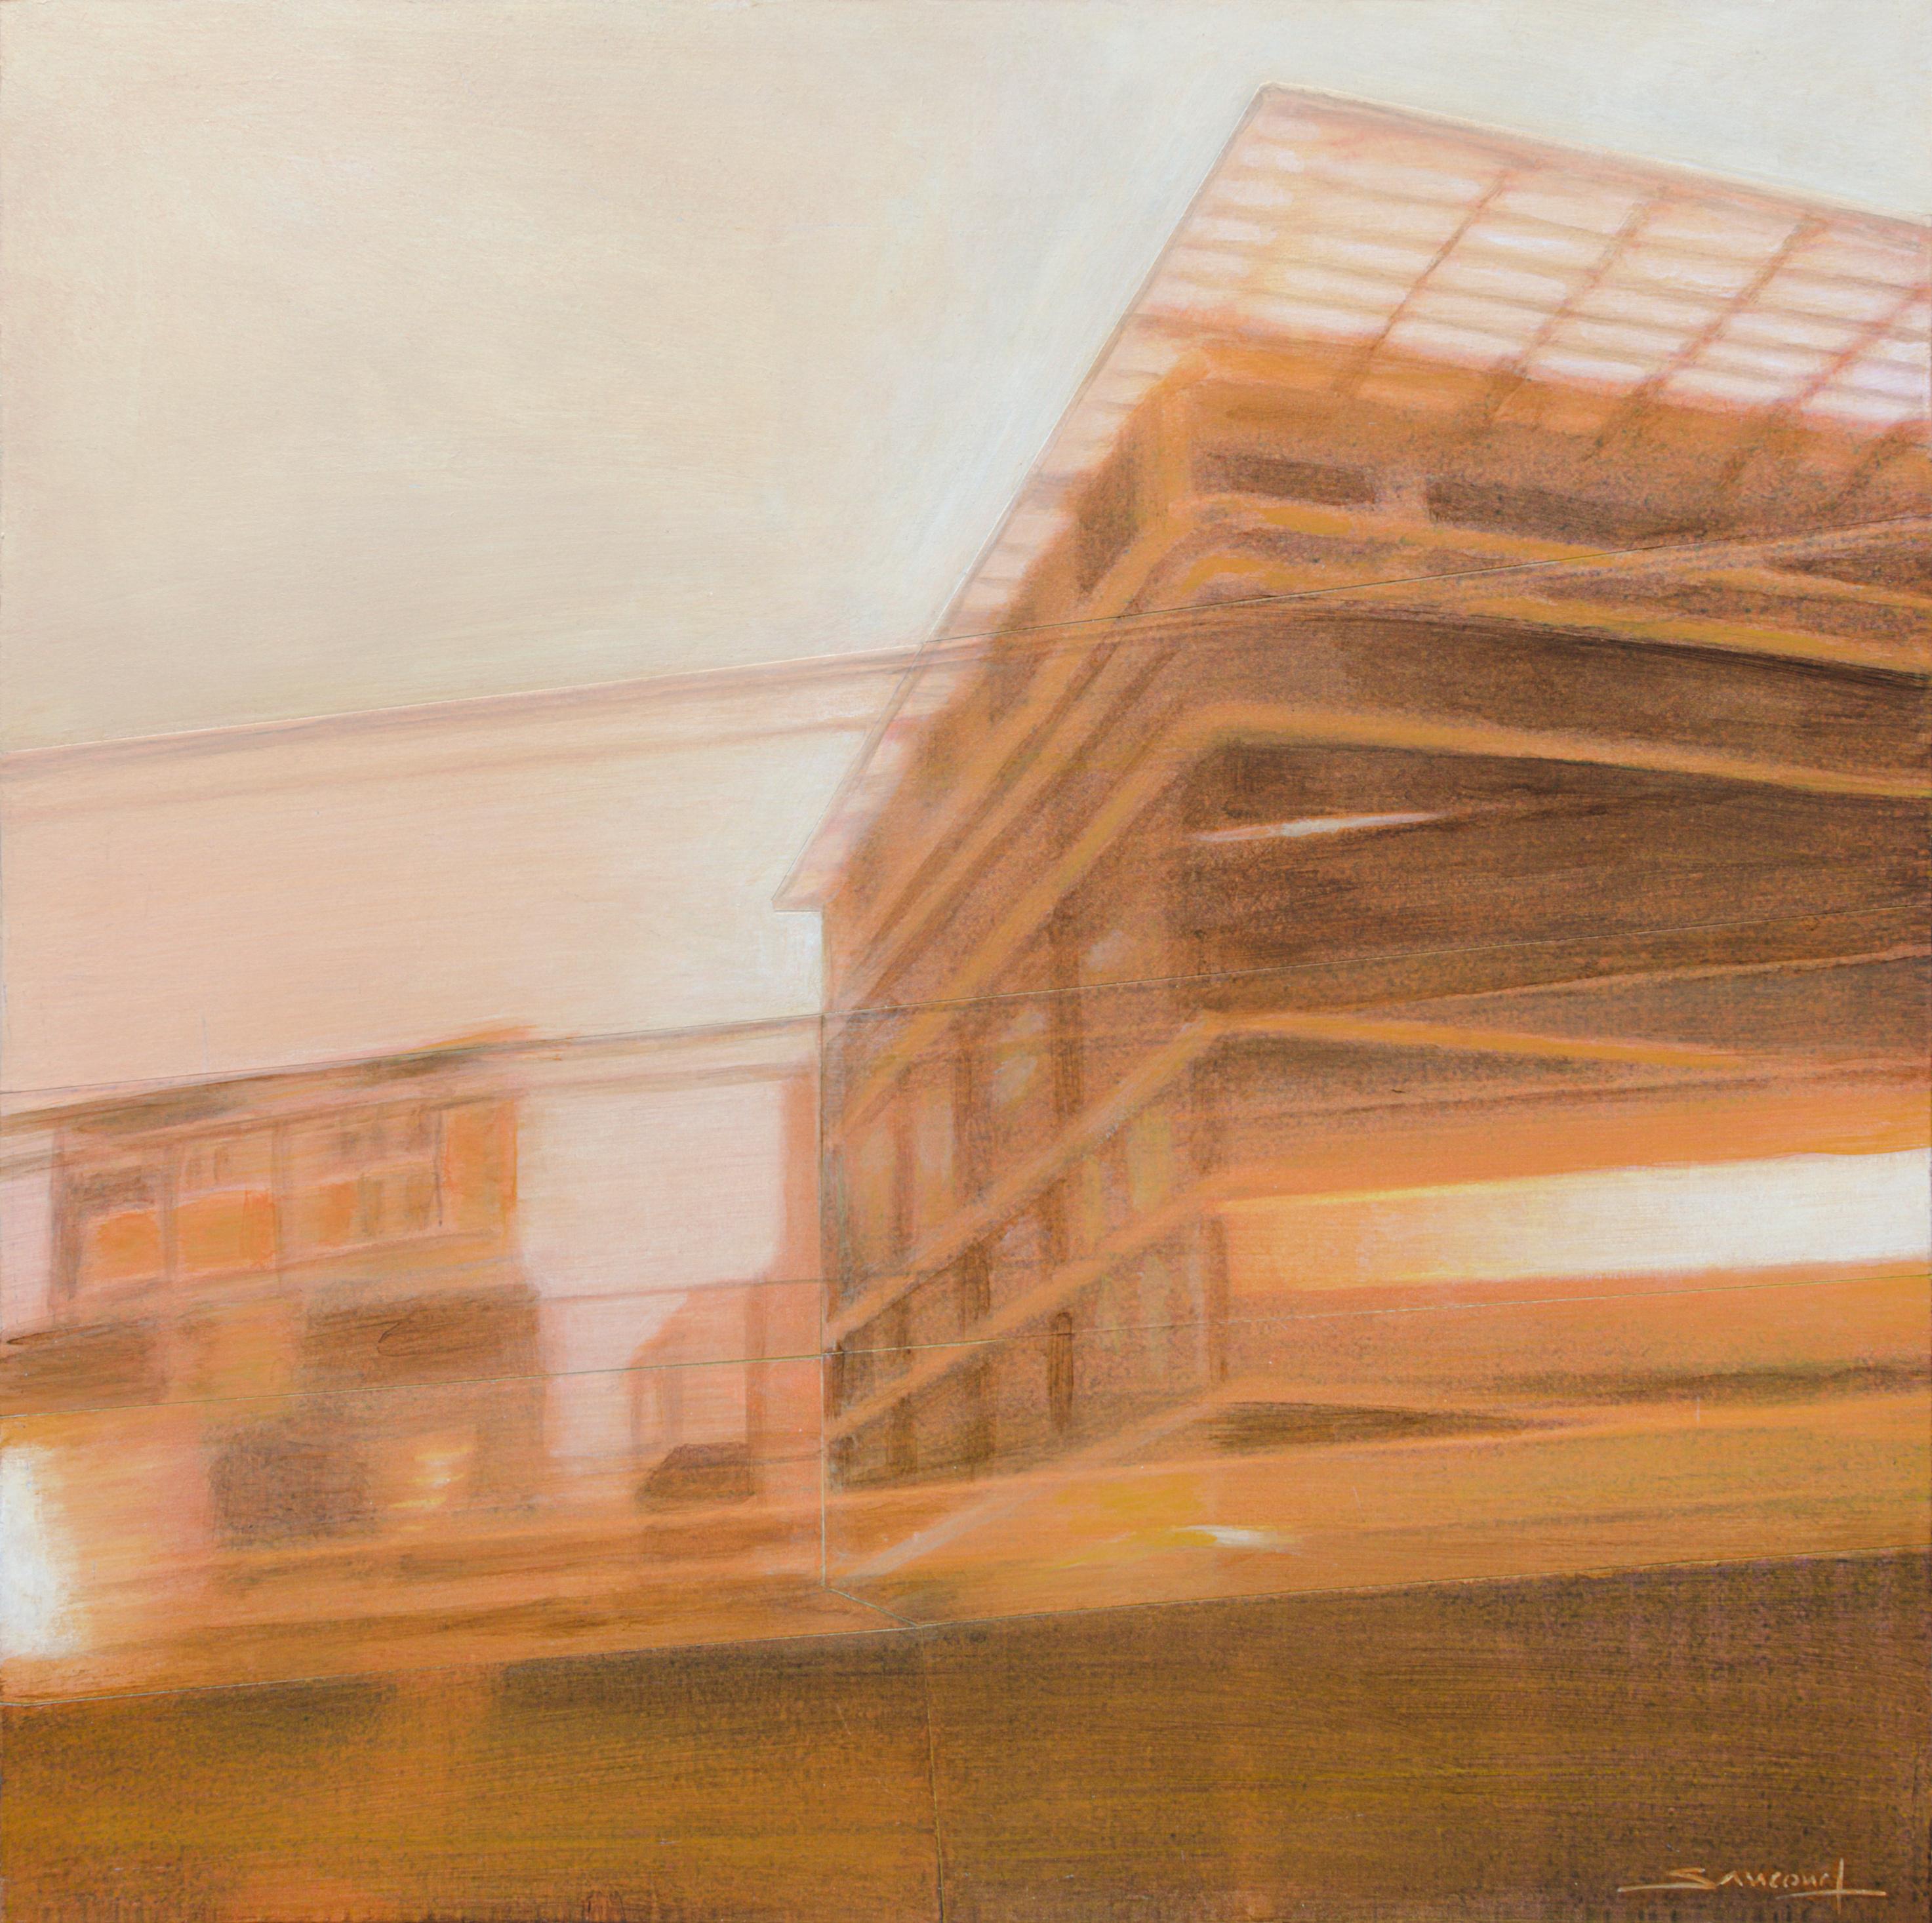 ""Night Train #13 (Night Train #13 (Early Morning)", Sepia Urban Landscape, Gemälde in Mischtechnik